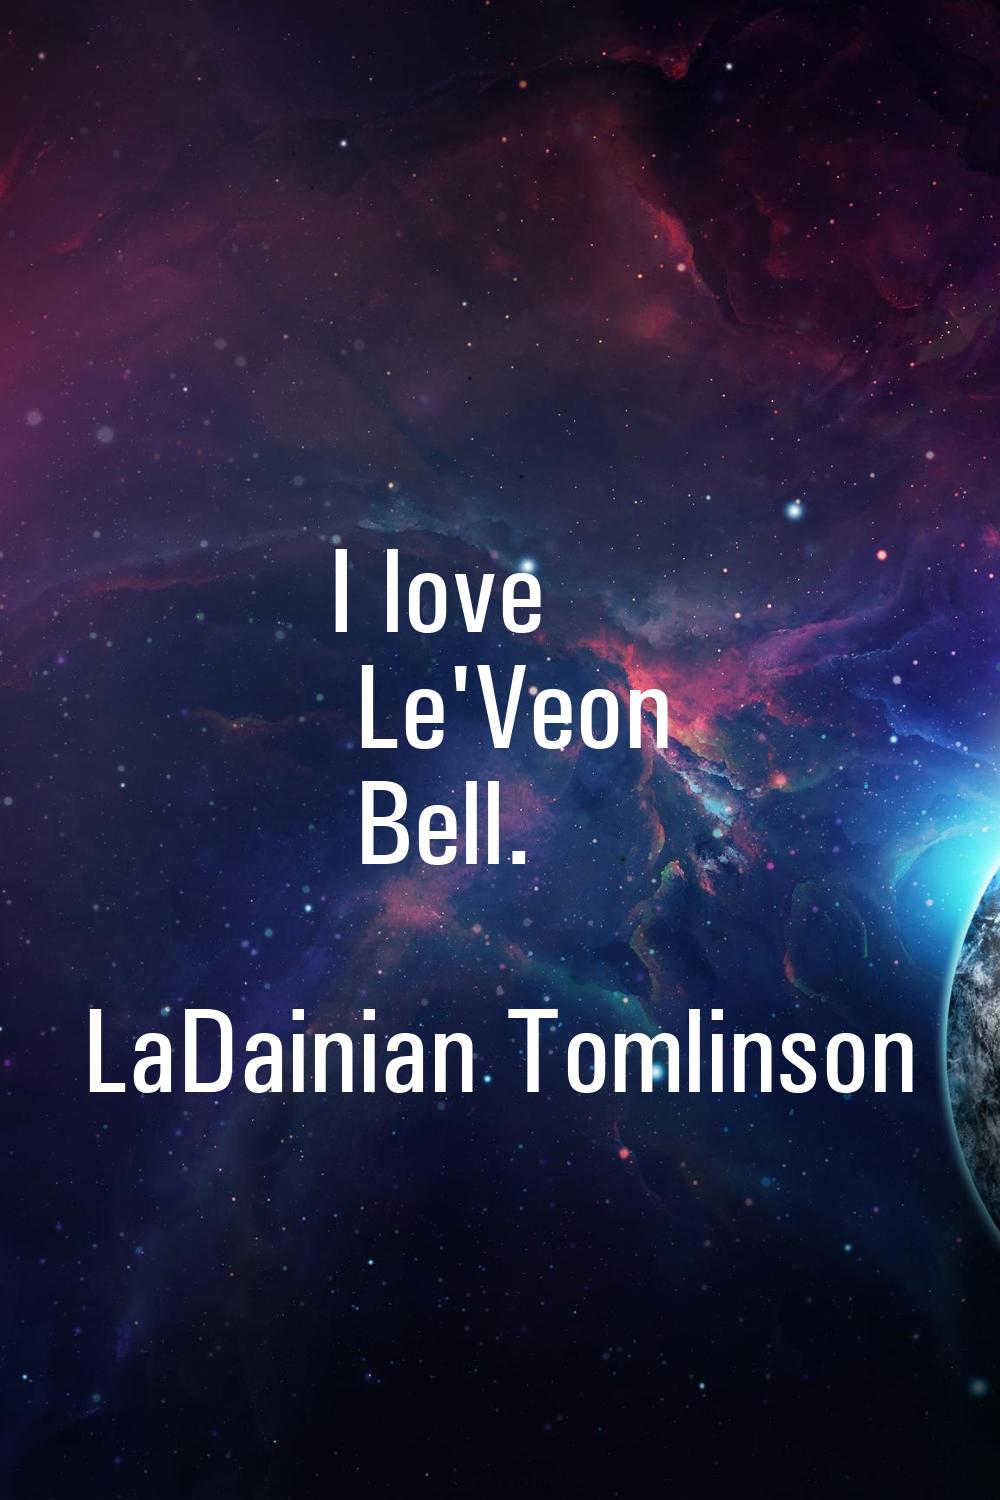 I love Le'Veon Bell.